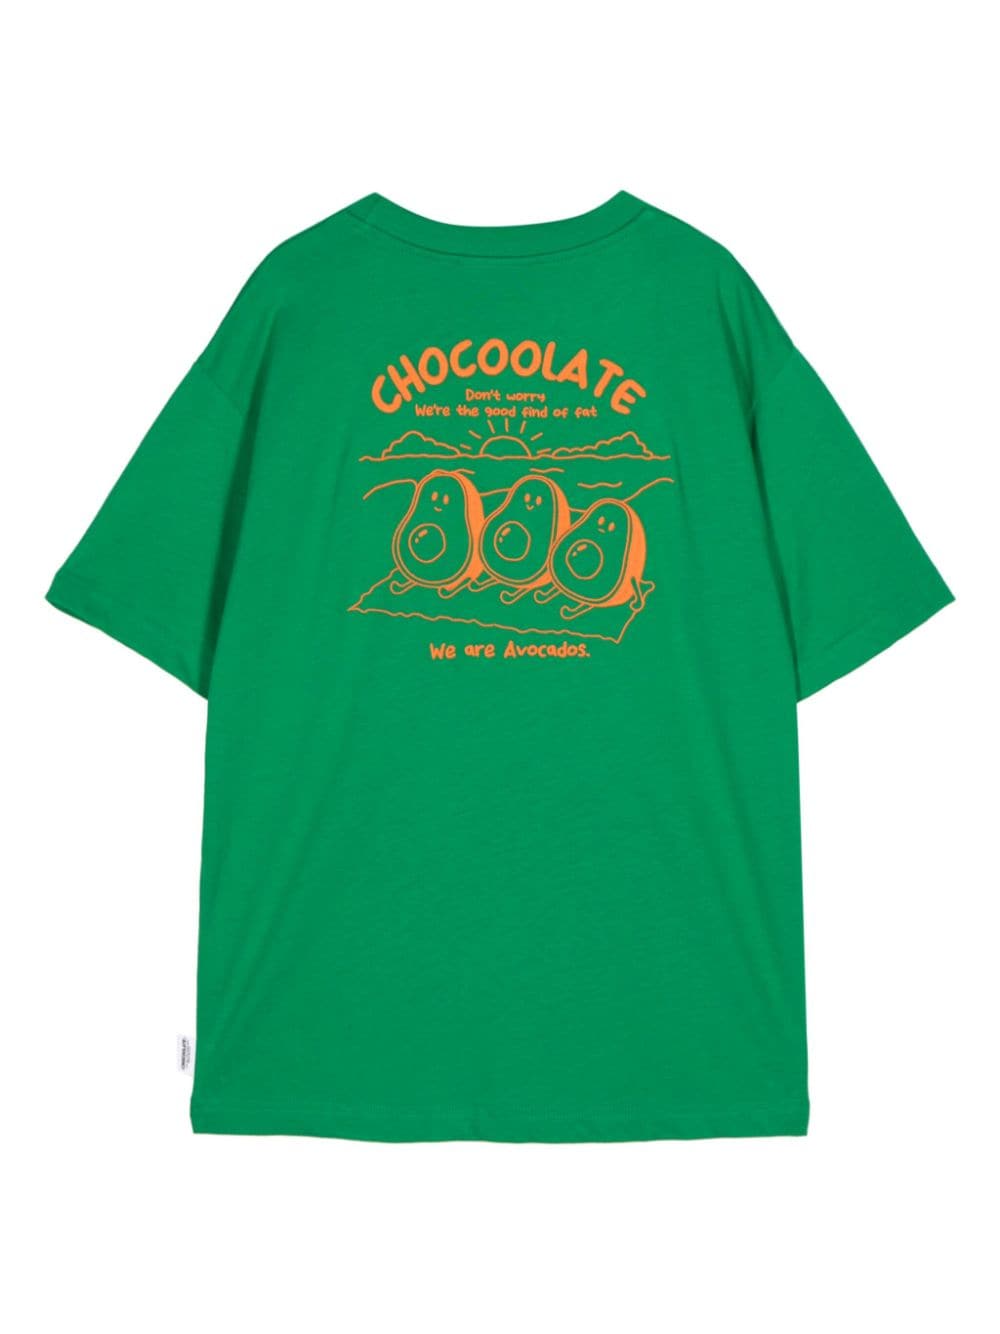 CHOCOOLATE Avocado katoenen T-shirt - Groen